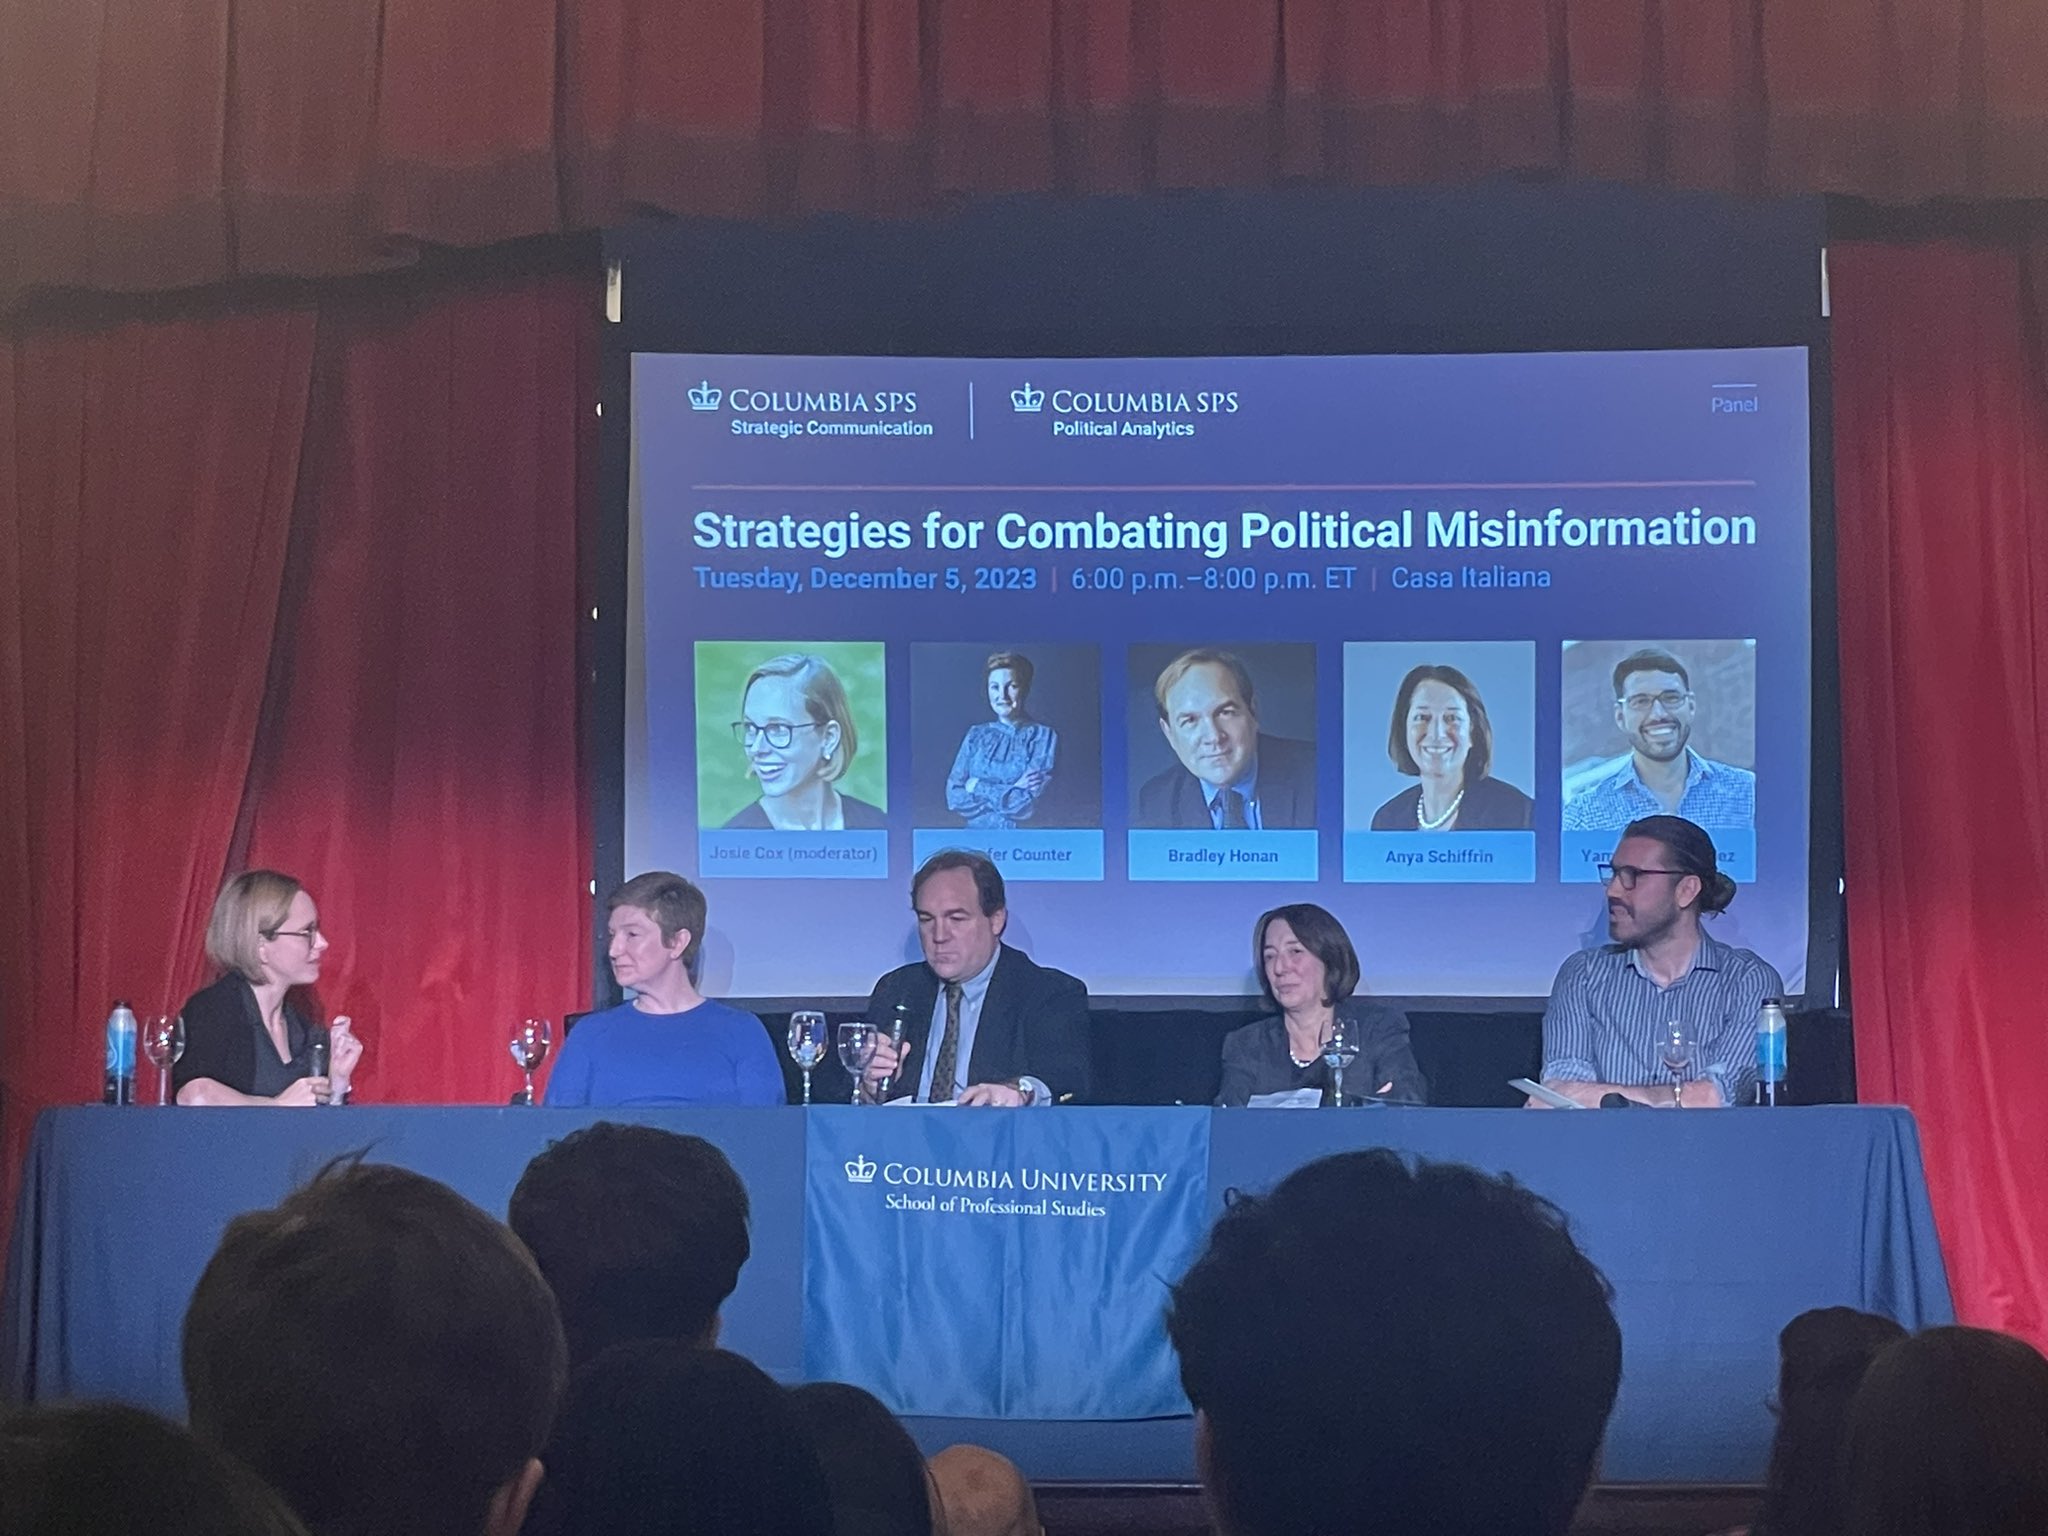 Bradley Honan joined Columbia University panel on Misinformation and Disinformation